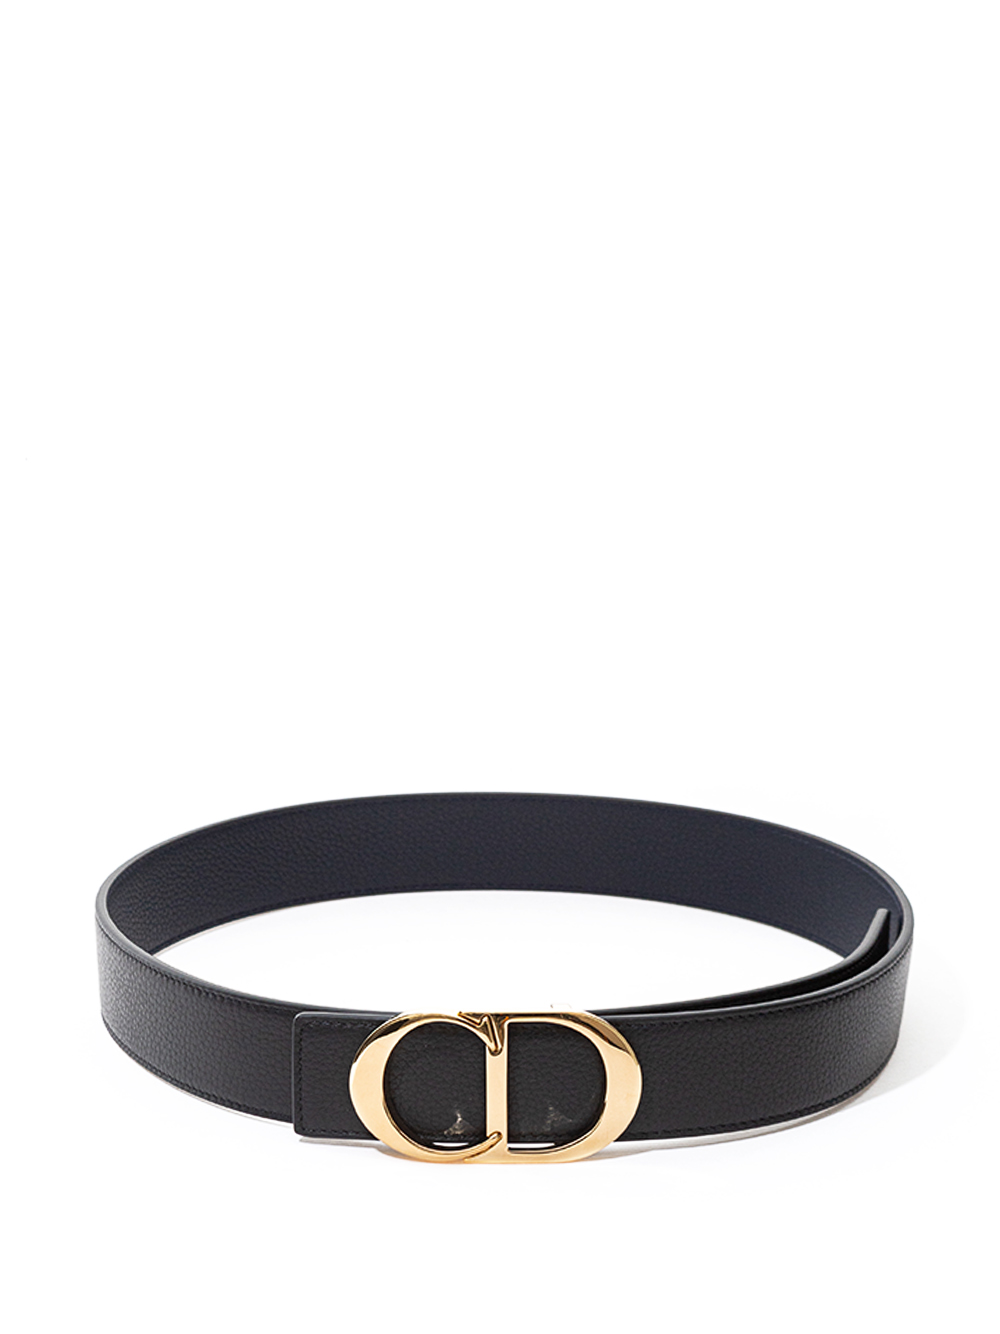 Black Dior Black Leather Belt 75 cm / 30 Inches